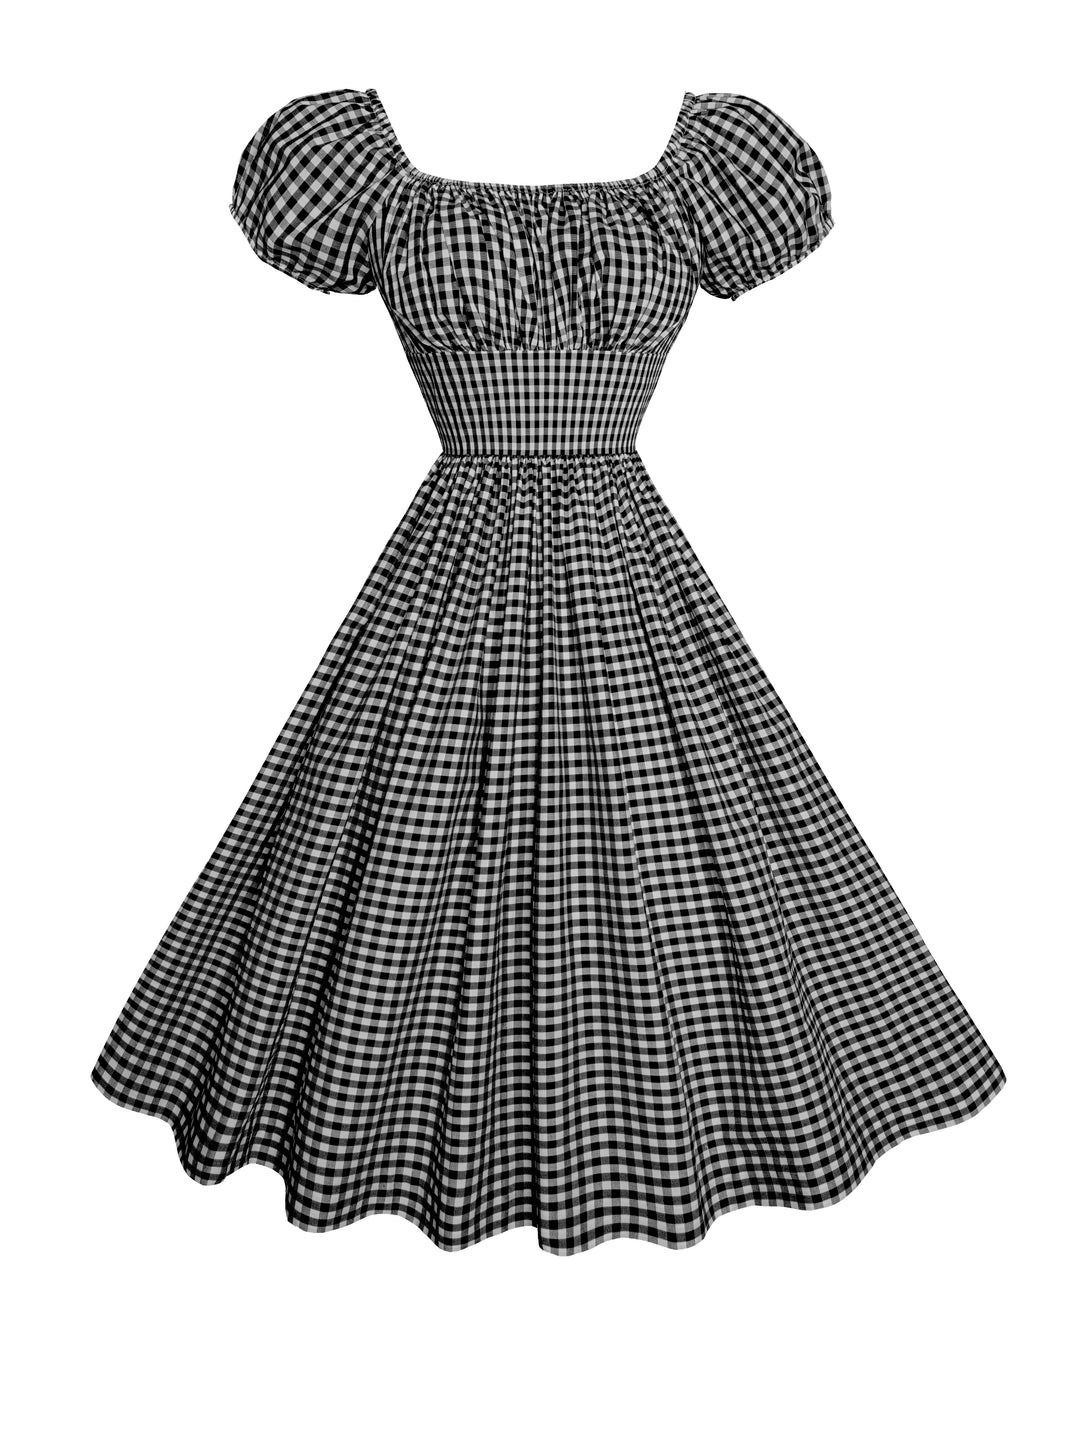 MTO - Loretta Dress in Black Gingham - Medium Checks